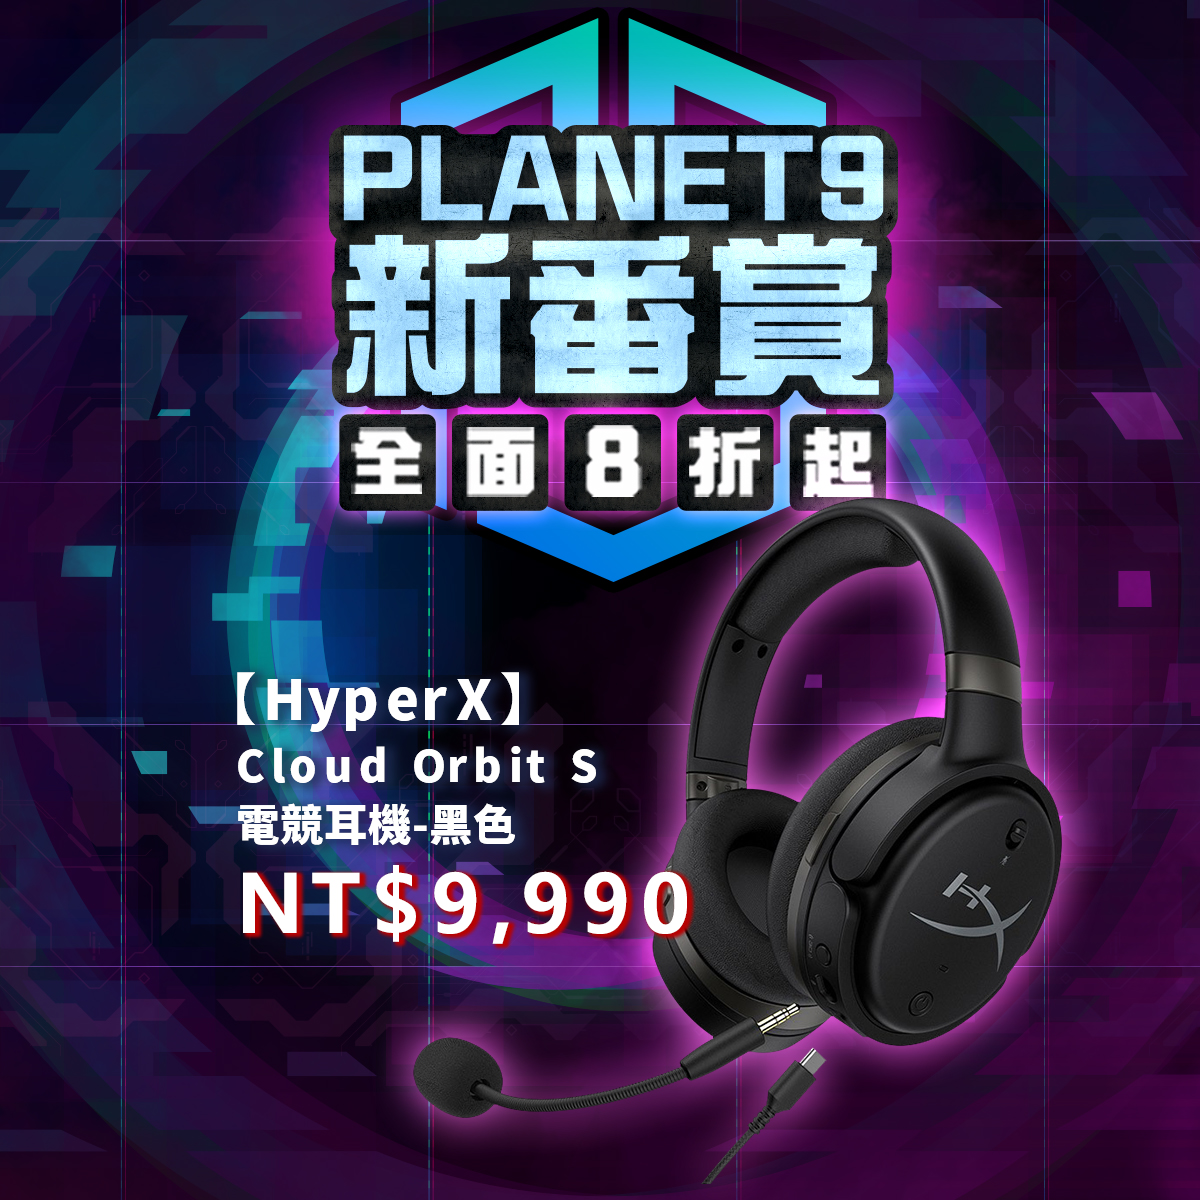 https://store.planet9.gg/TW/zh/headset-200851.html